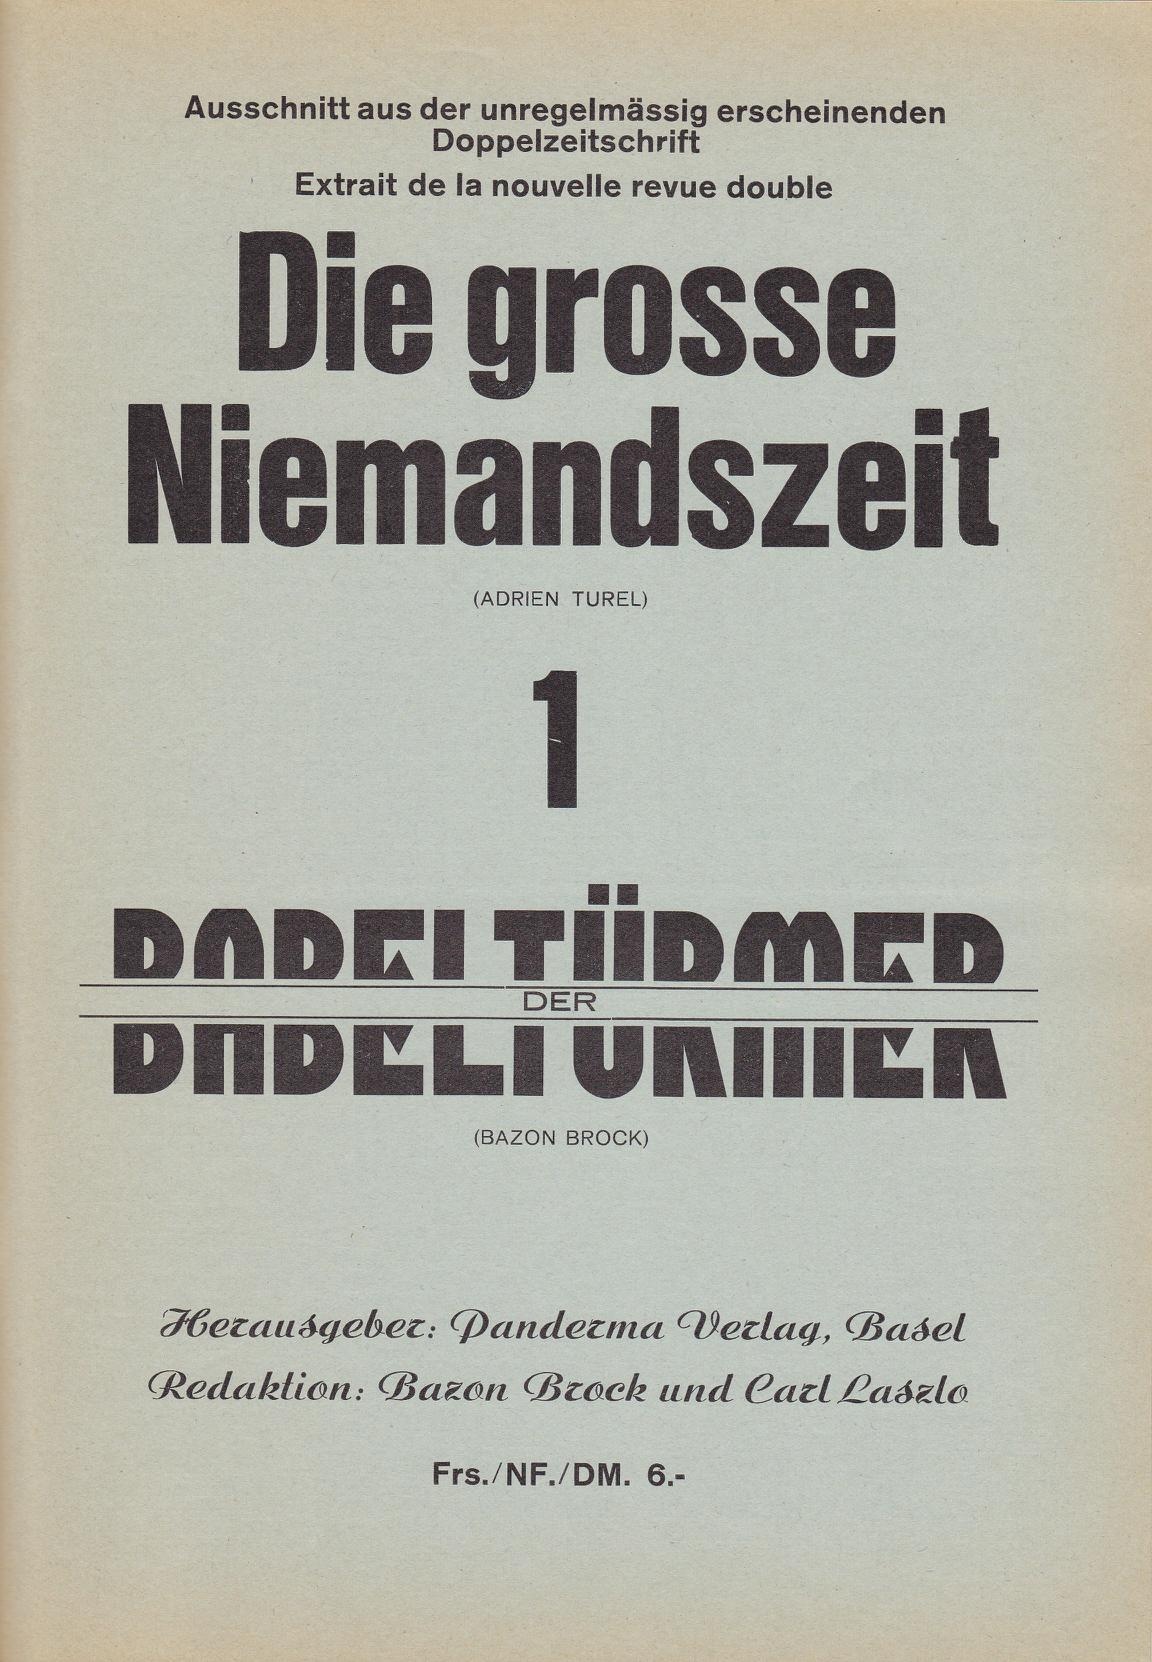 Der Babeltürmer 1, Bild: Panderma 4, 1961..